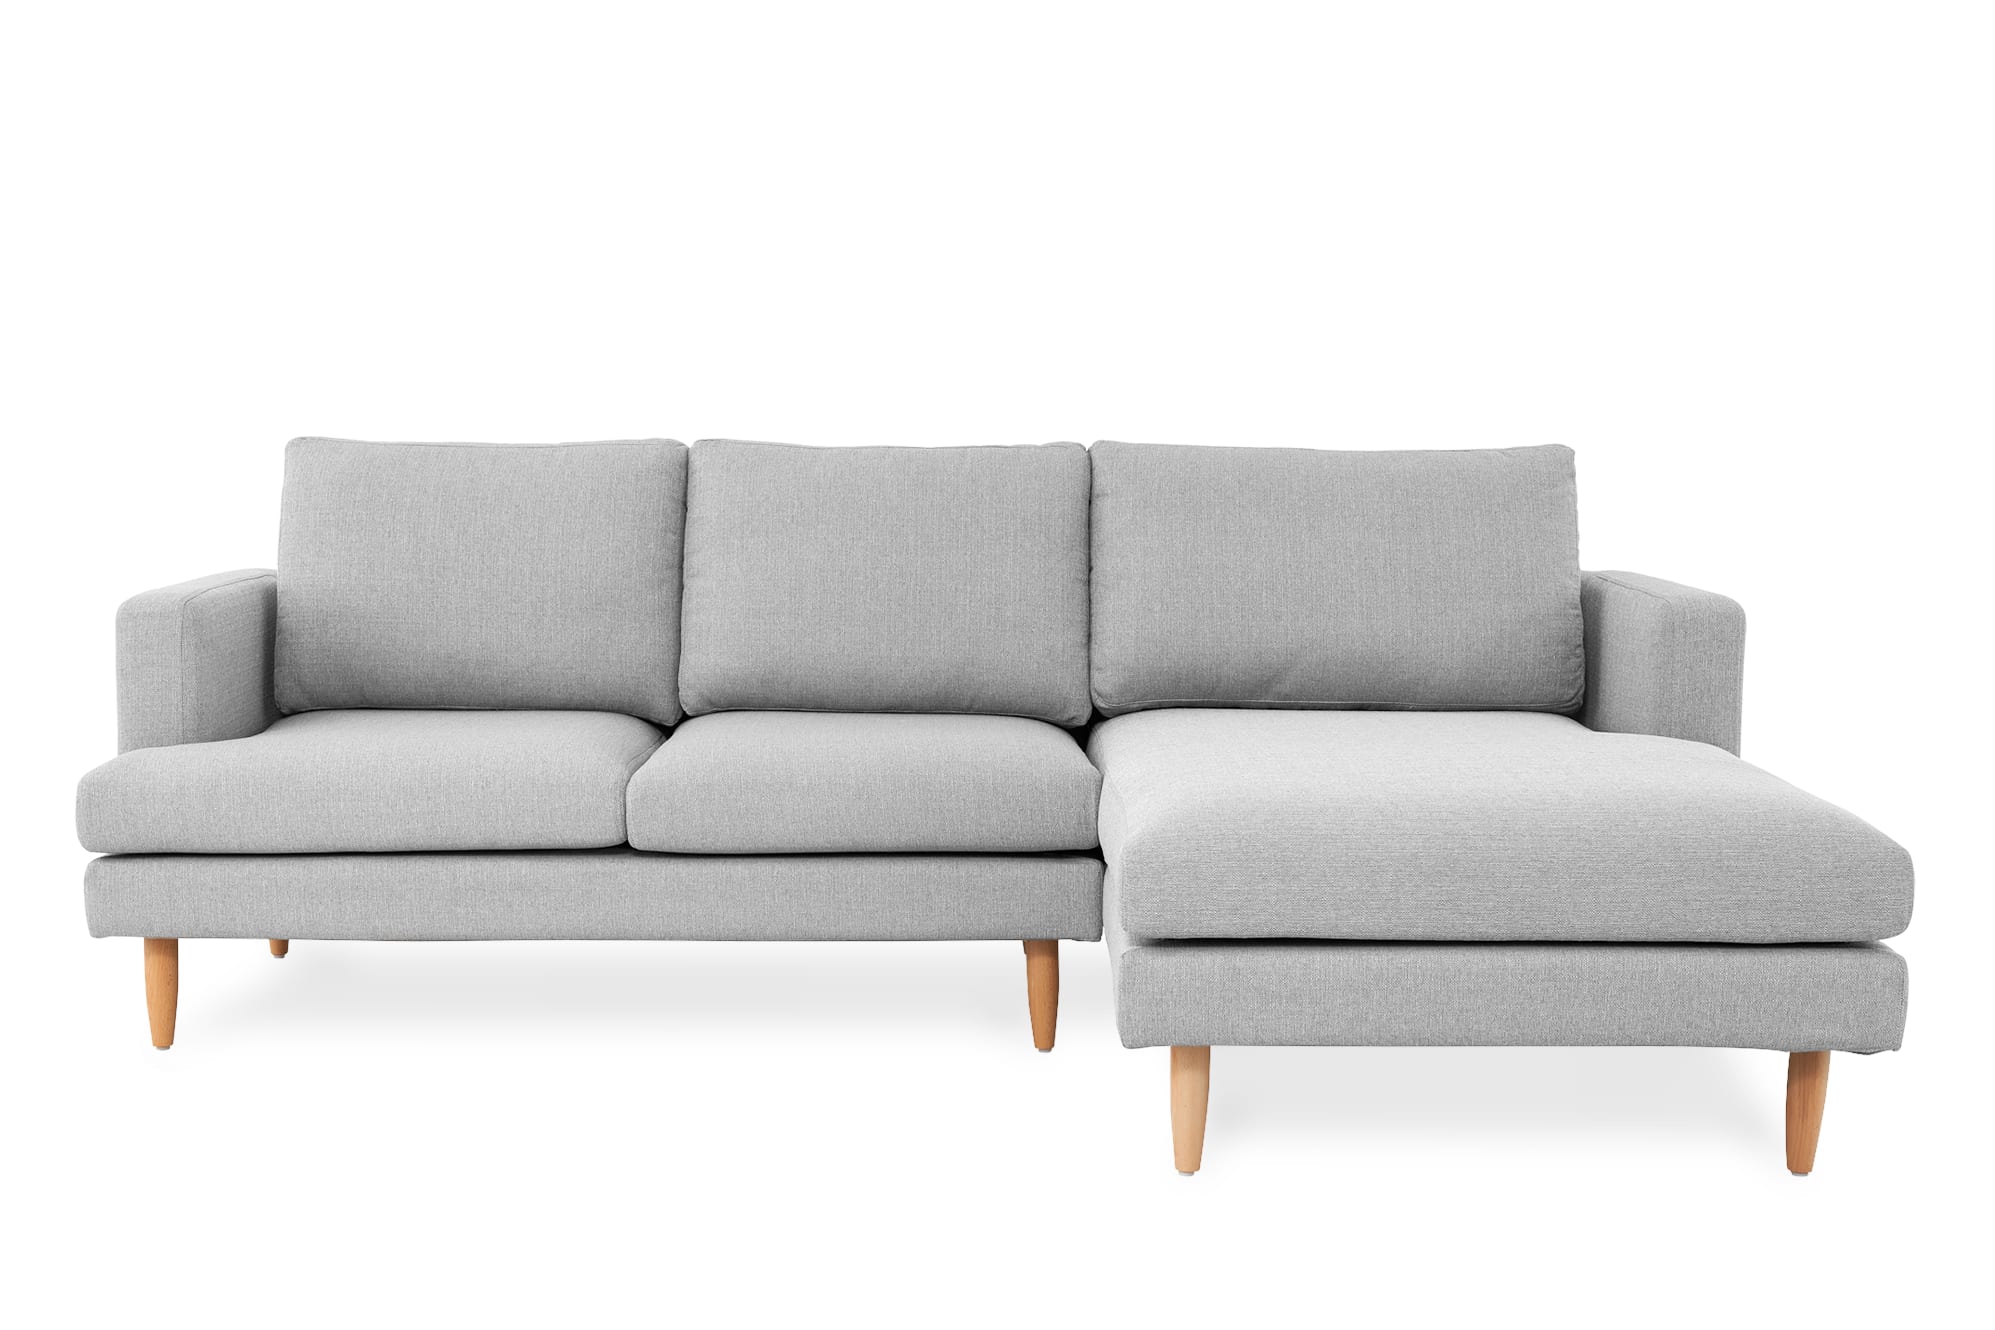 Tana Chaise Sectional Sofa, Light Facing | Castlery